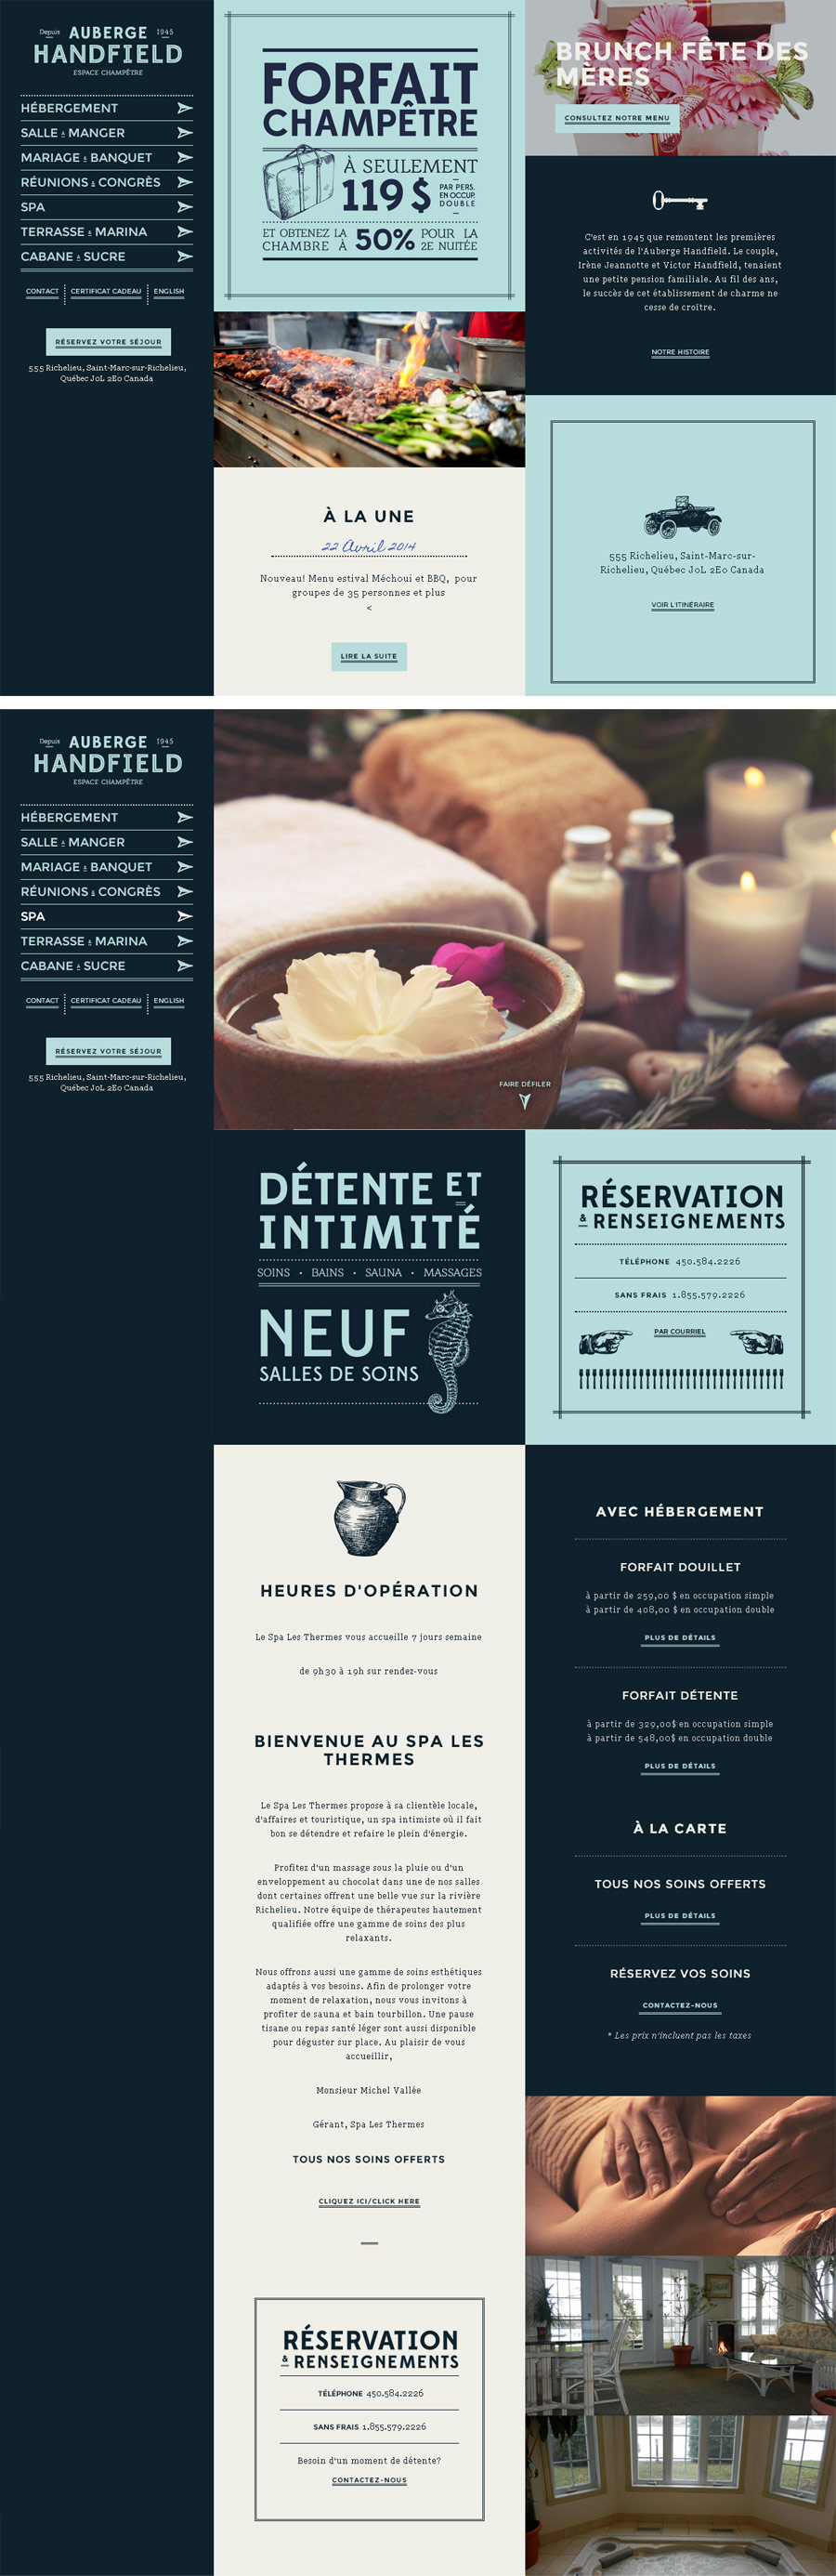 Auberge Handfield - Inspiración web design